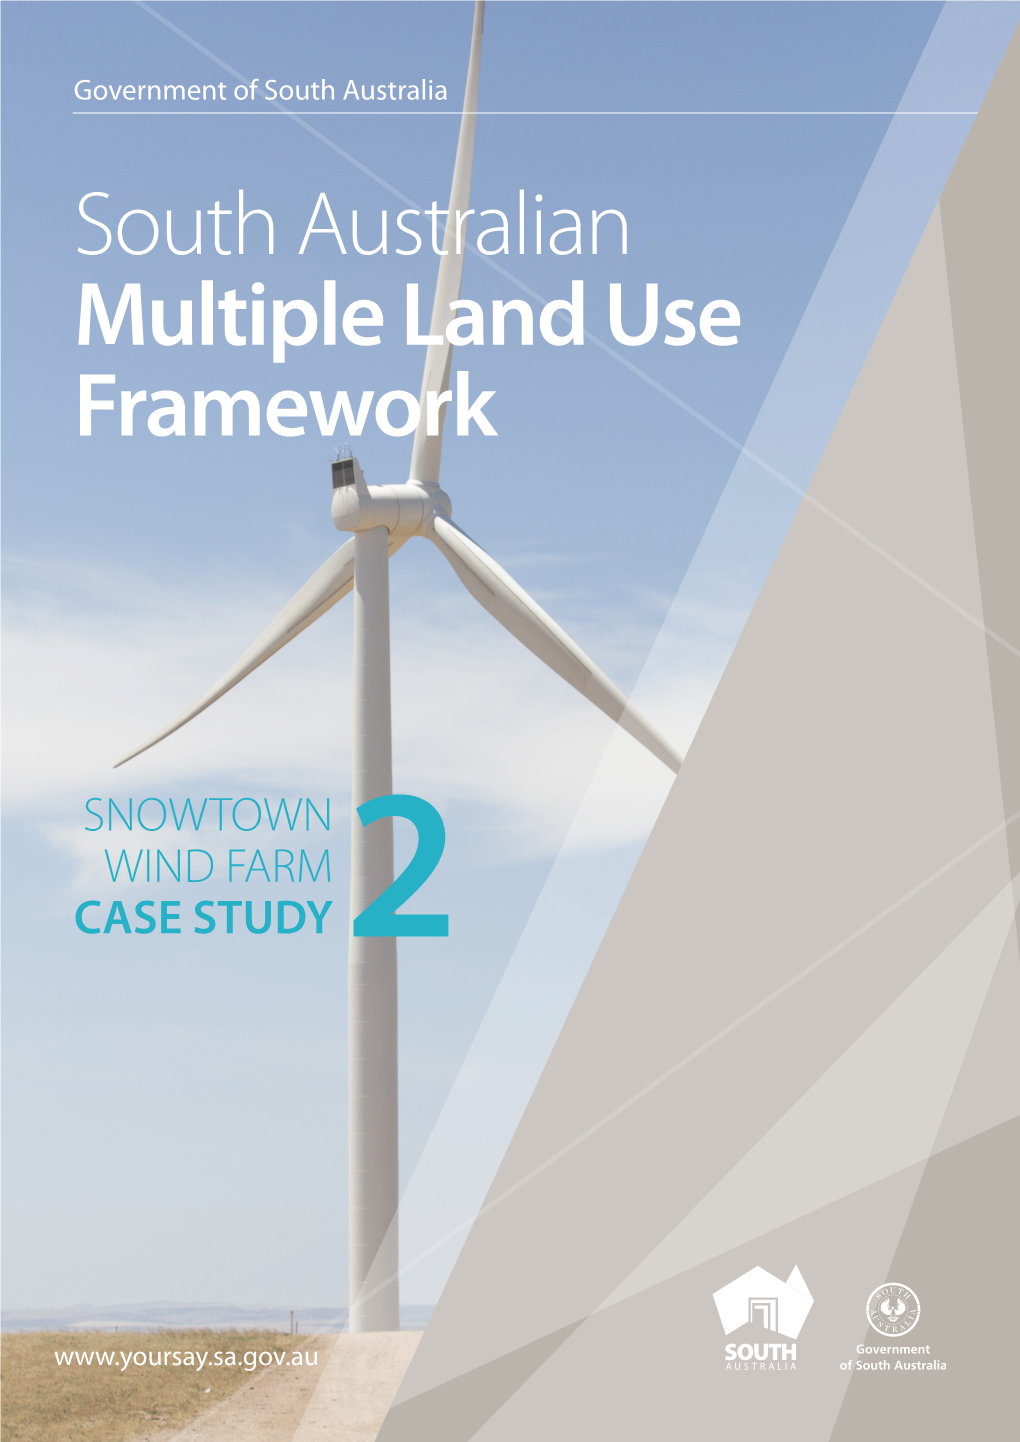 Snowtown Wind Farm Case Study 2